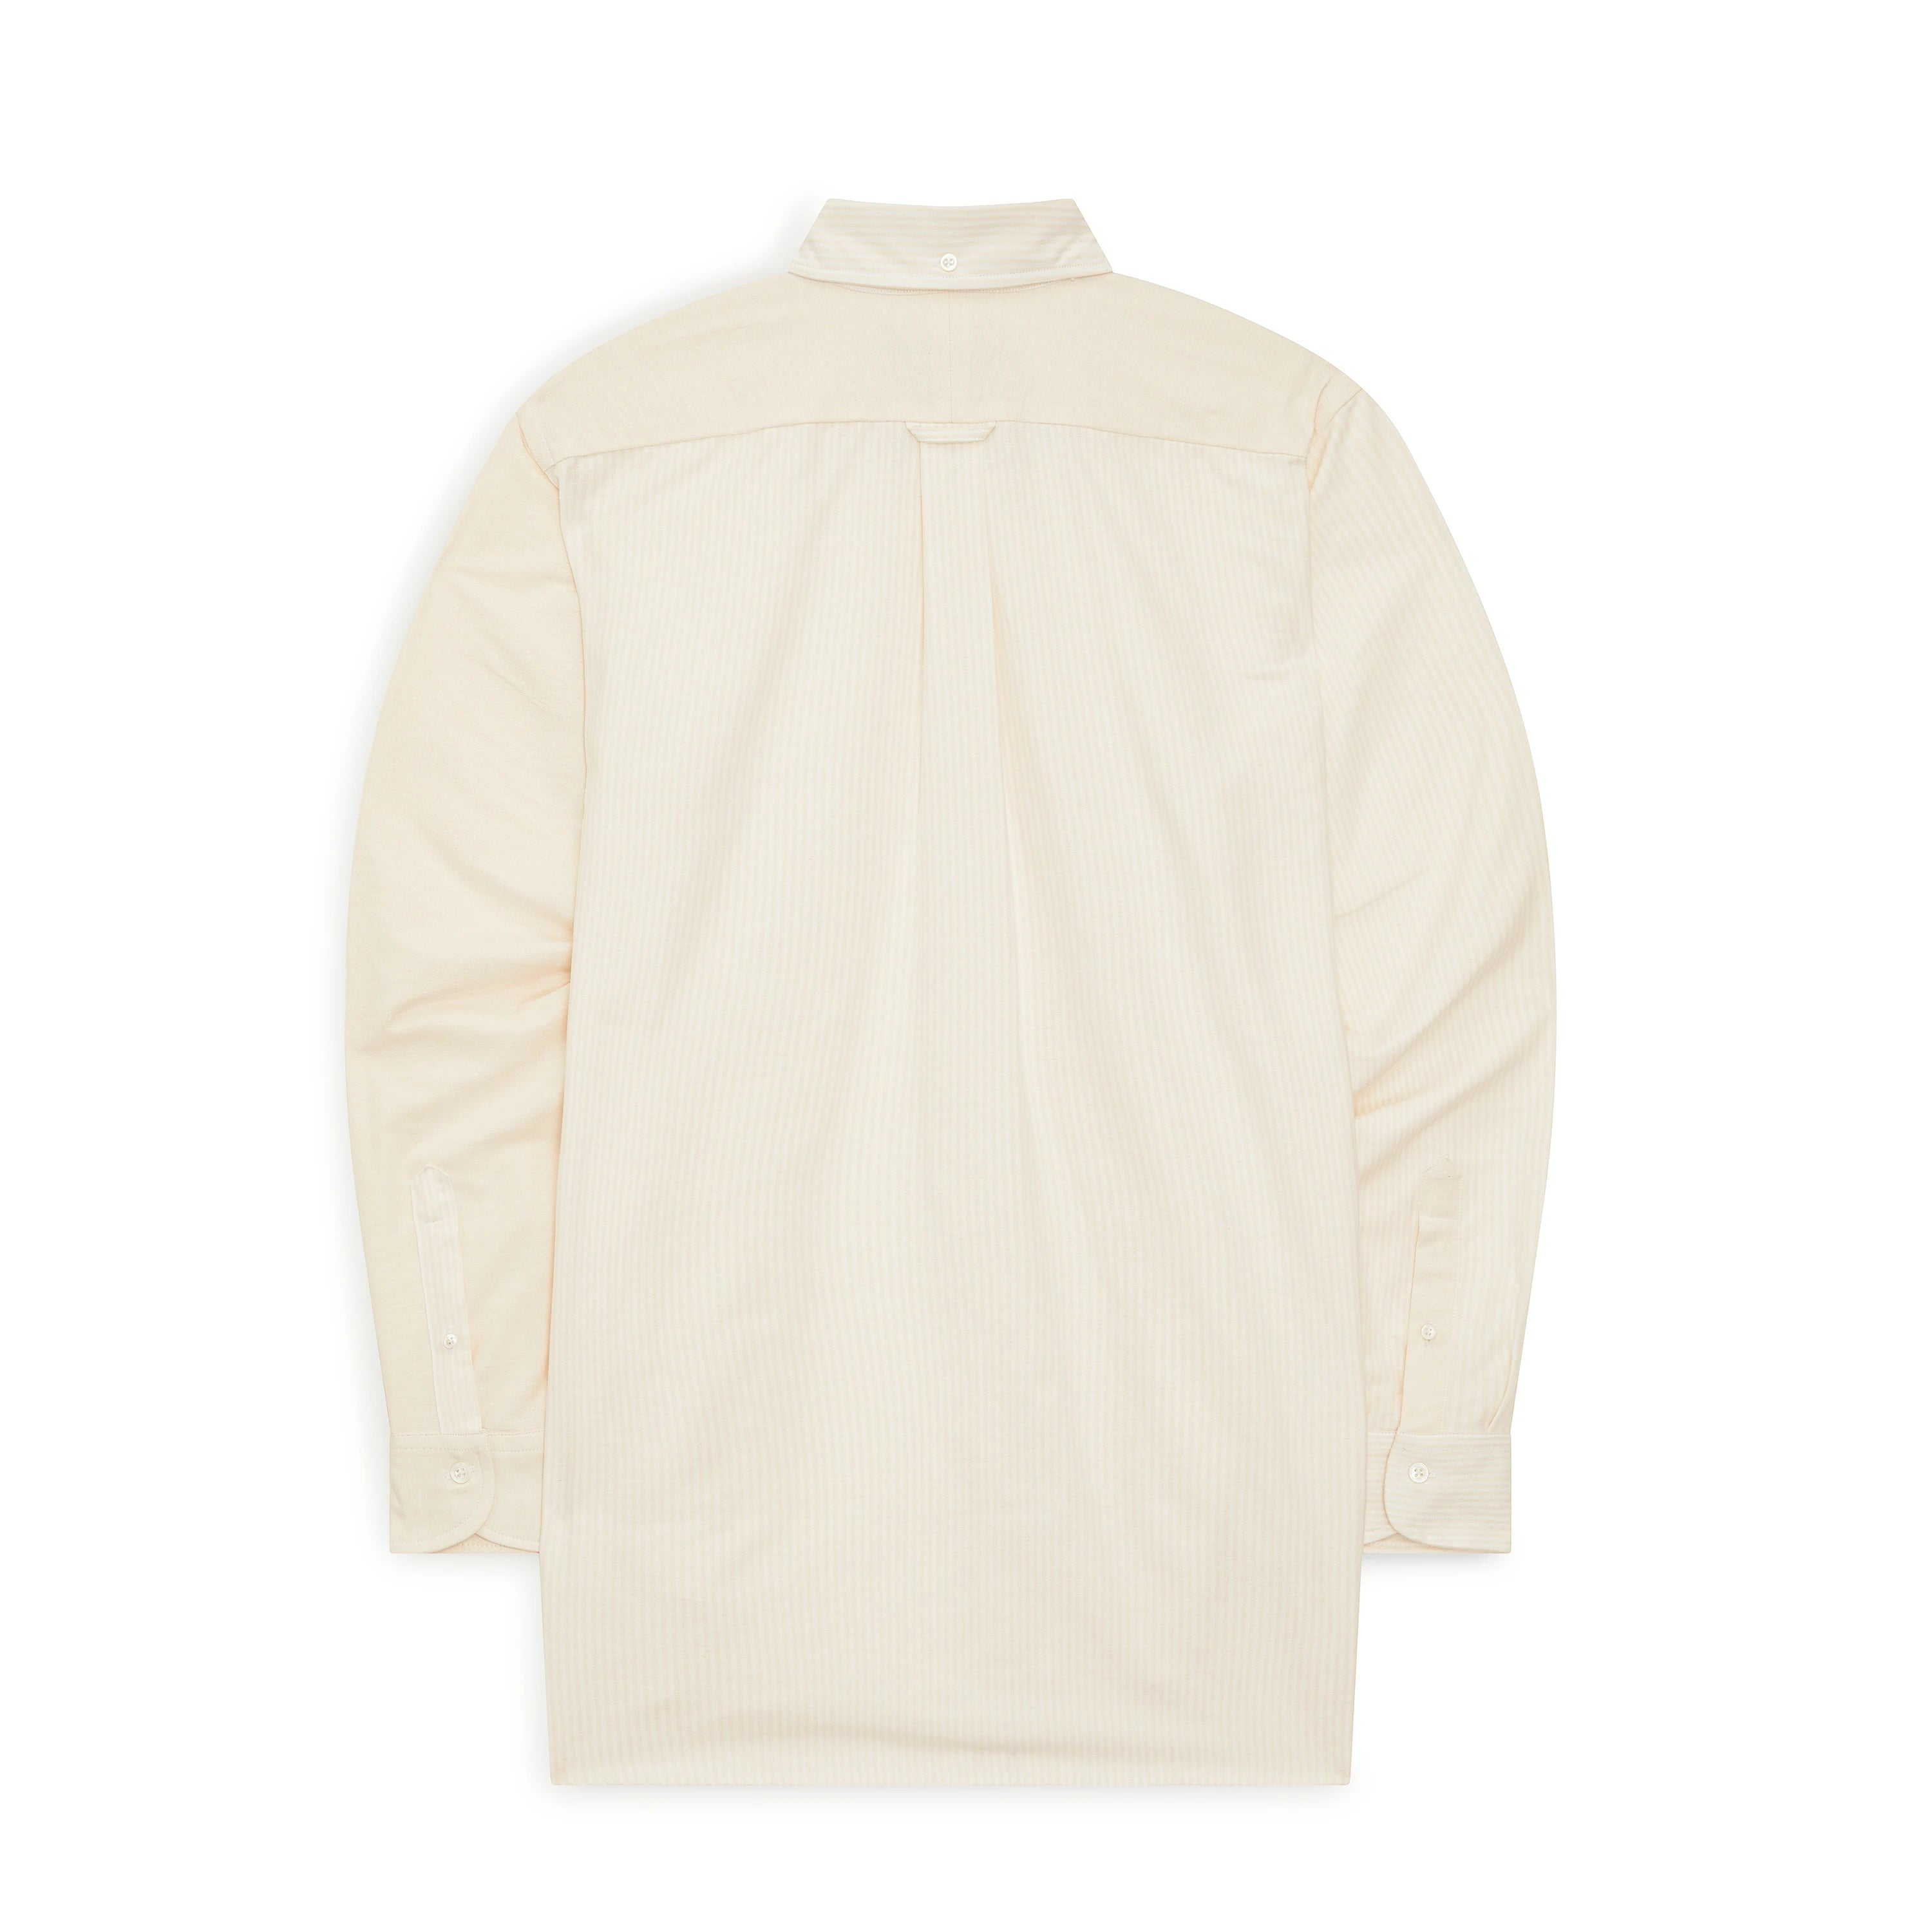 Buttermilk Button Down Shirt Striped and Plain